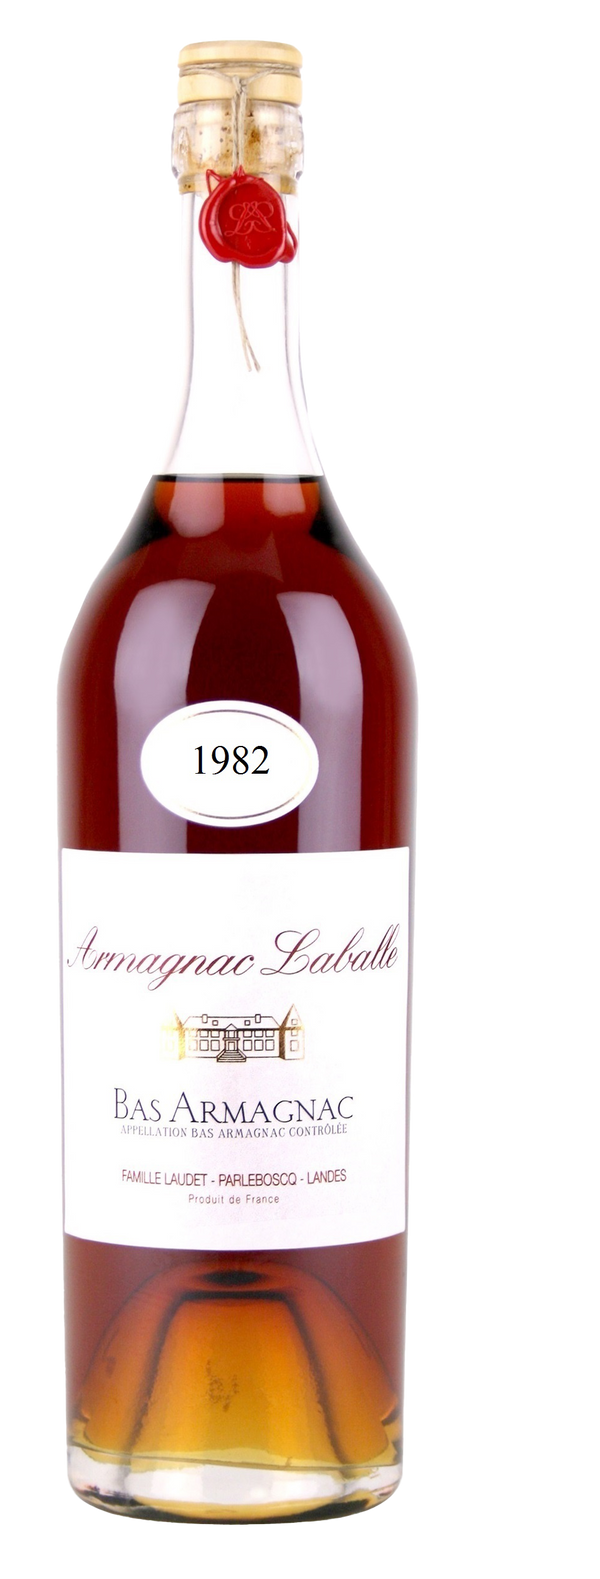 Château Laballe Bas Armagnac 1982